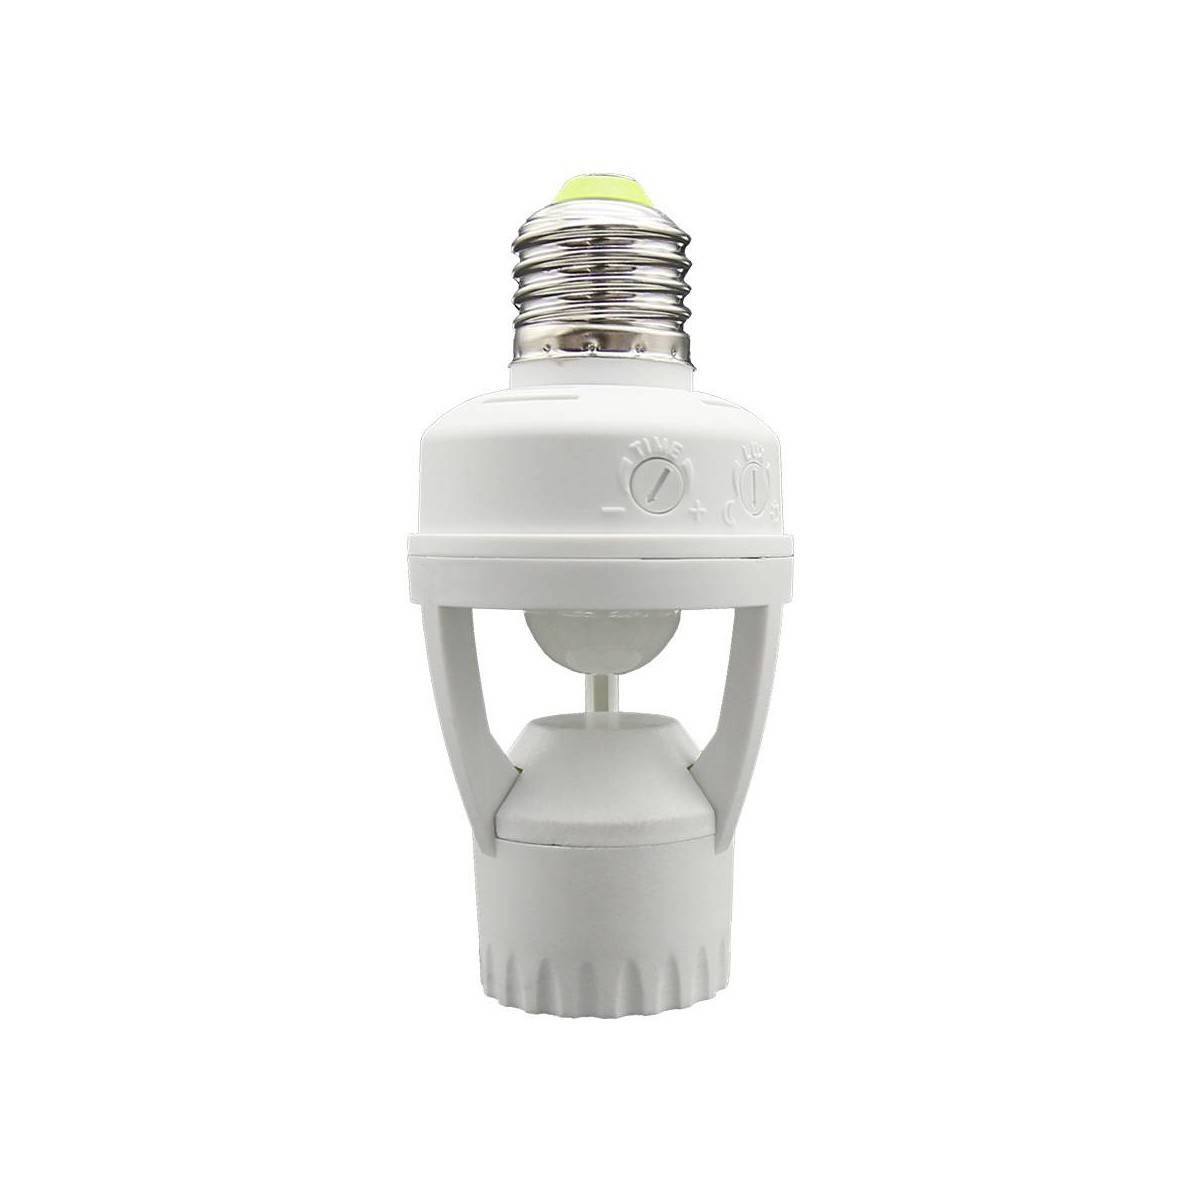 Kaufe E27-Fassung, Lampenfassung, Lampenfassung mit Schalter, Lampenfassung,  energiesparende LED-Tischlampe, LED-Sockel, Lampensockel(keine Glühbirne)